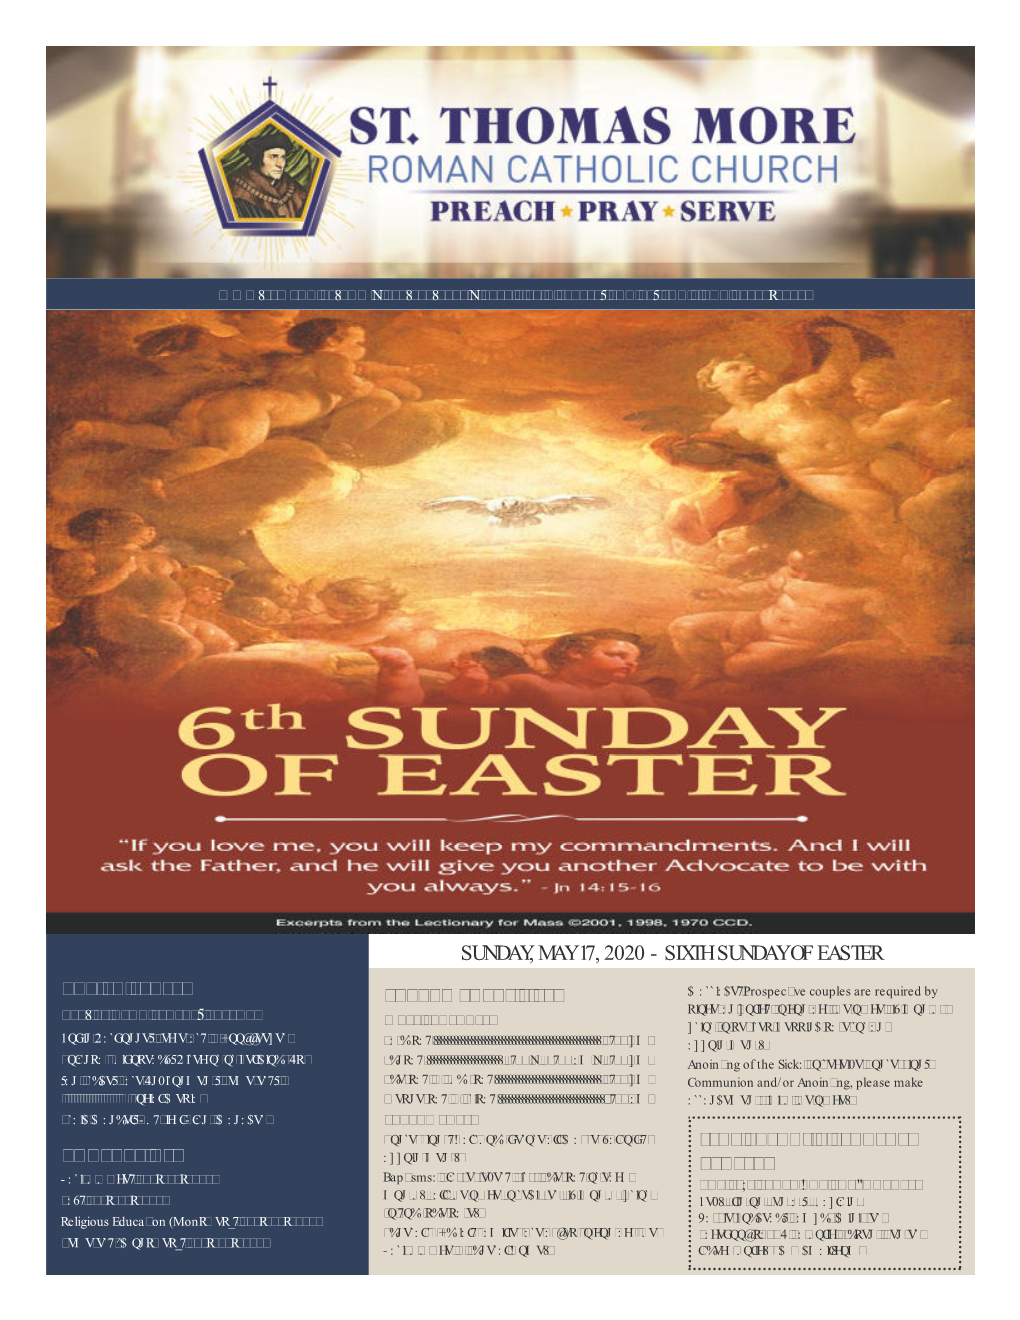 Sunday, May 17, 2020 - Sixth Sunday of Easter